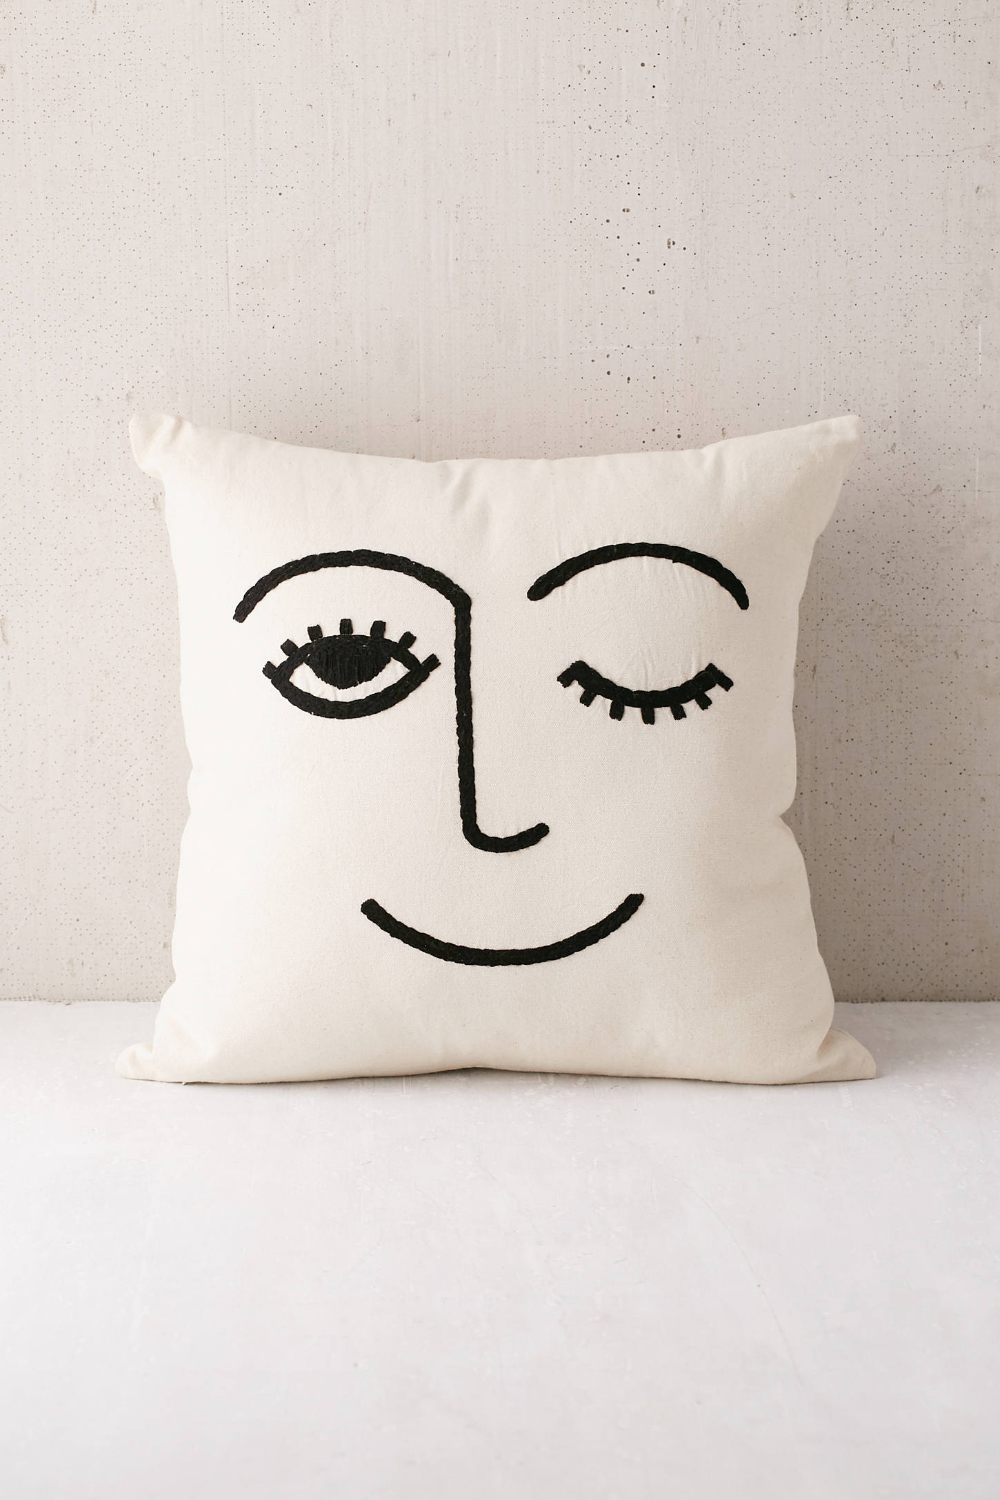 Winky Embroidered Pillow - Winky Embroidered Pillow -   18 diy Pillows painted ideas